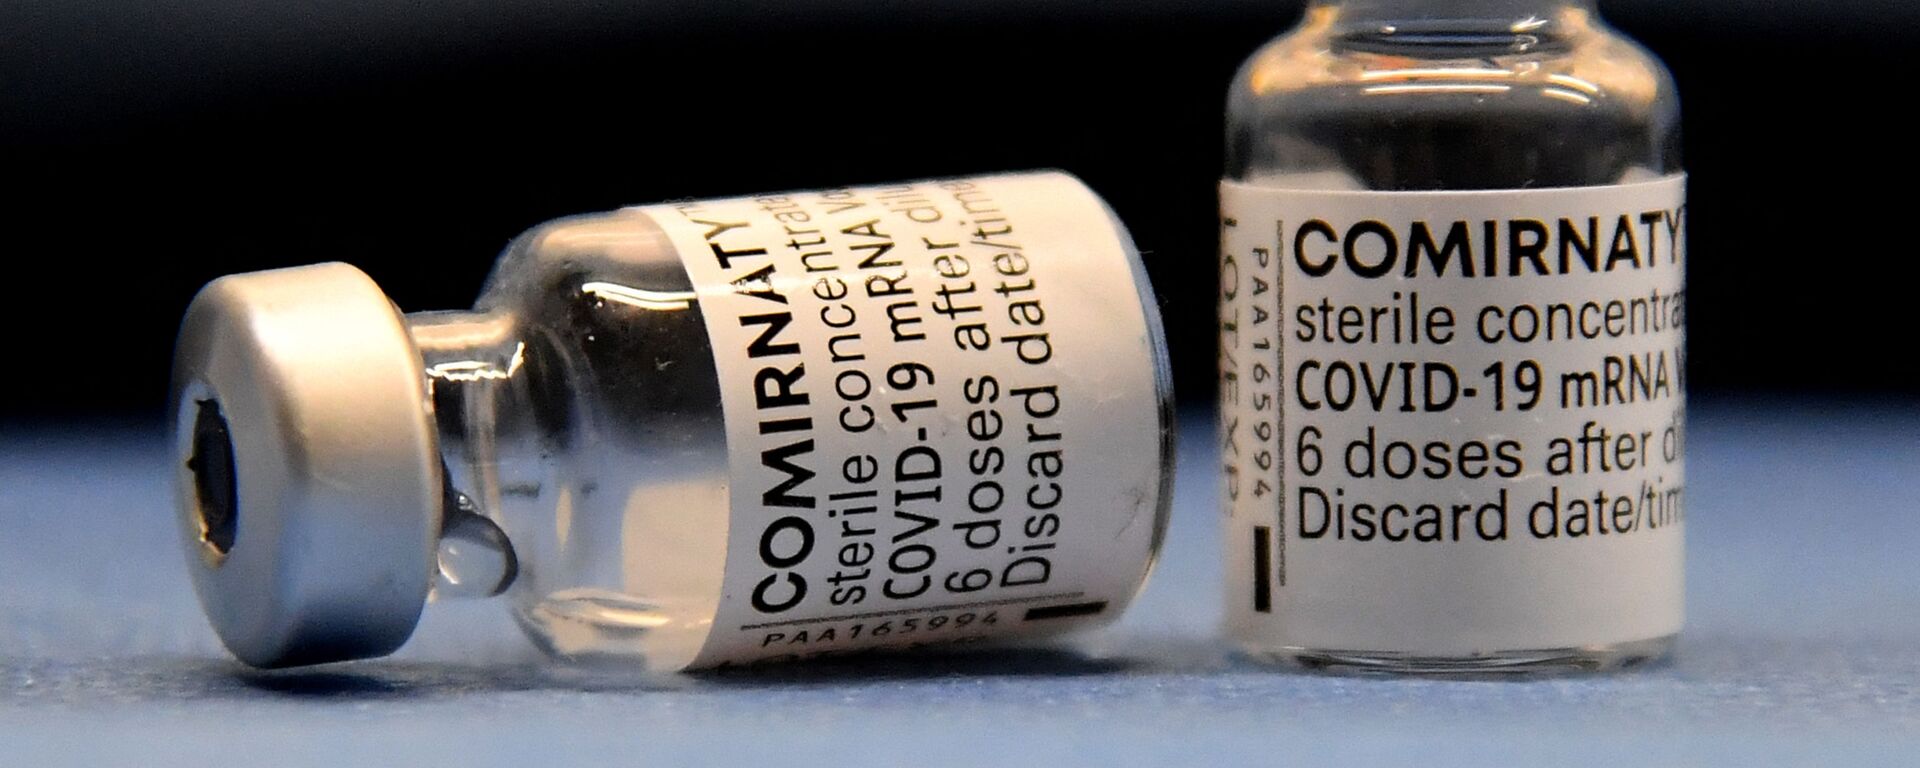 Ампулы с вакциной от коронавируса Pfizer/BioNTech - Sputnik Литва, 1920, 16.06.2021